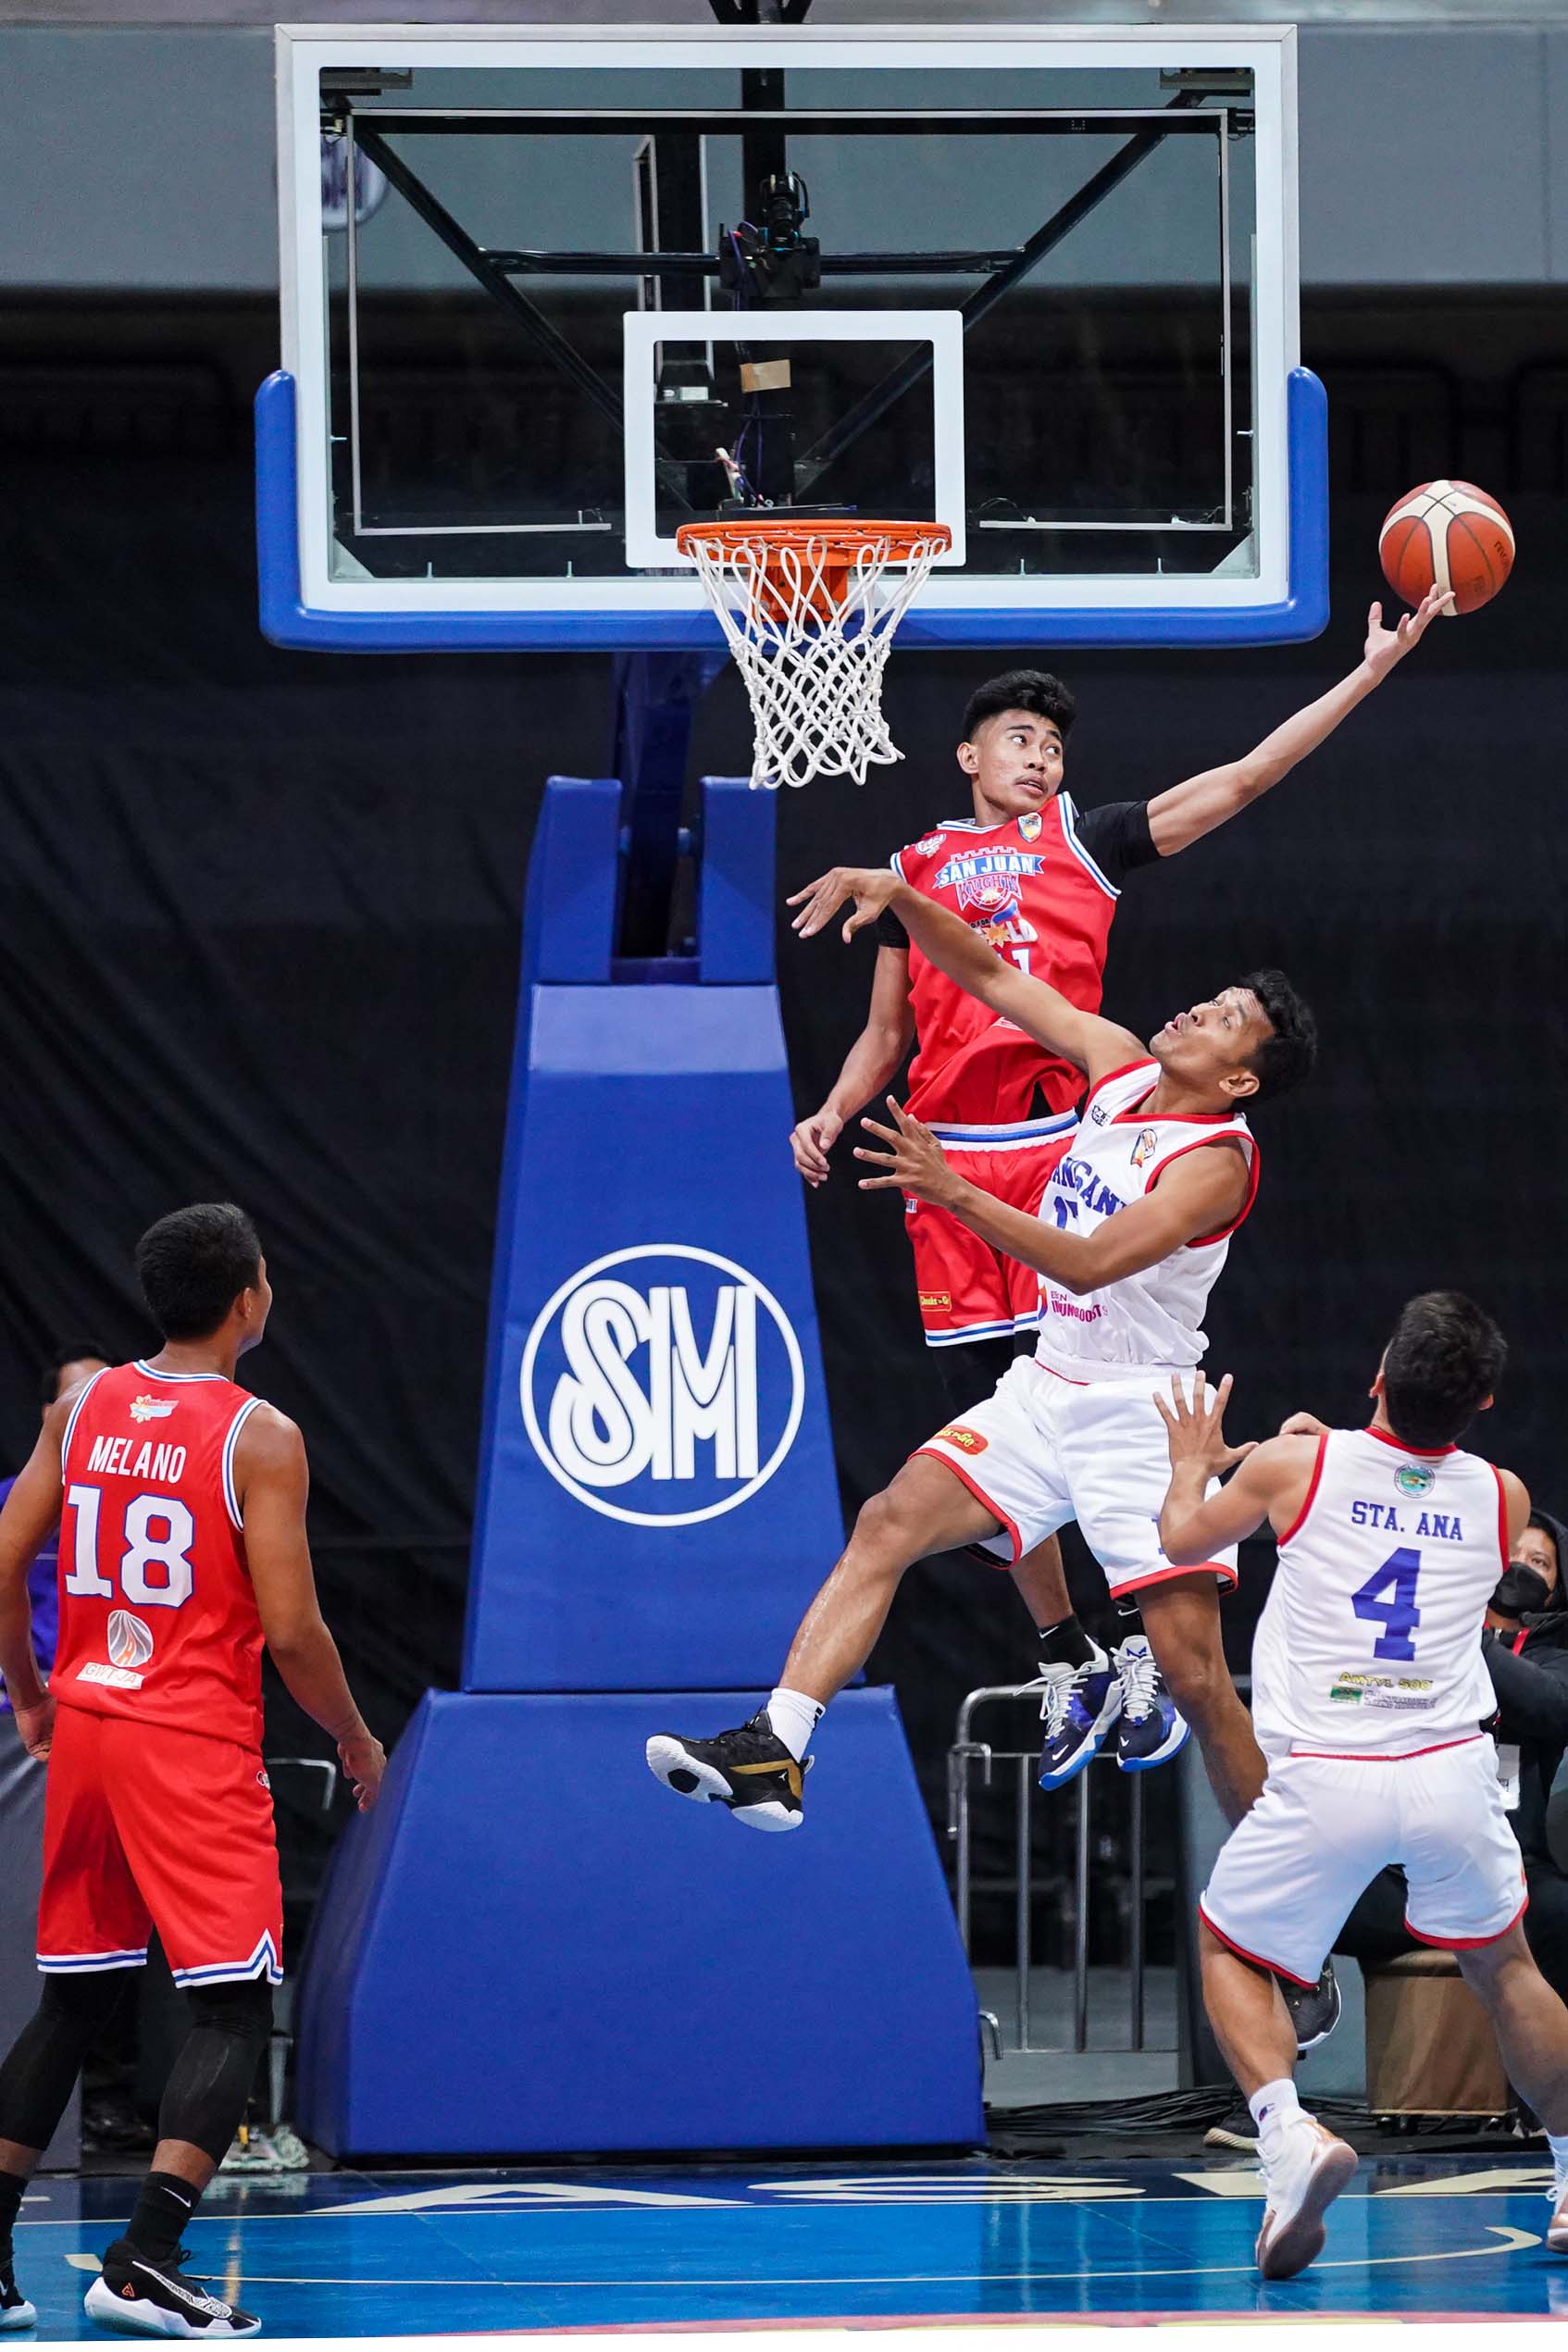 2021-Chooks-MPBL-Sarangani-vs-San-Juan-Rhenz-Abando-2 Pasig's Fran Yu excited to face San Juan's Abando before Letran bubble Basketball CSJL MPBL News  - philippine sports news